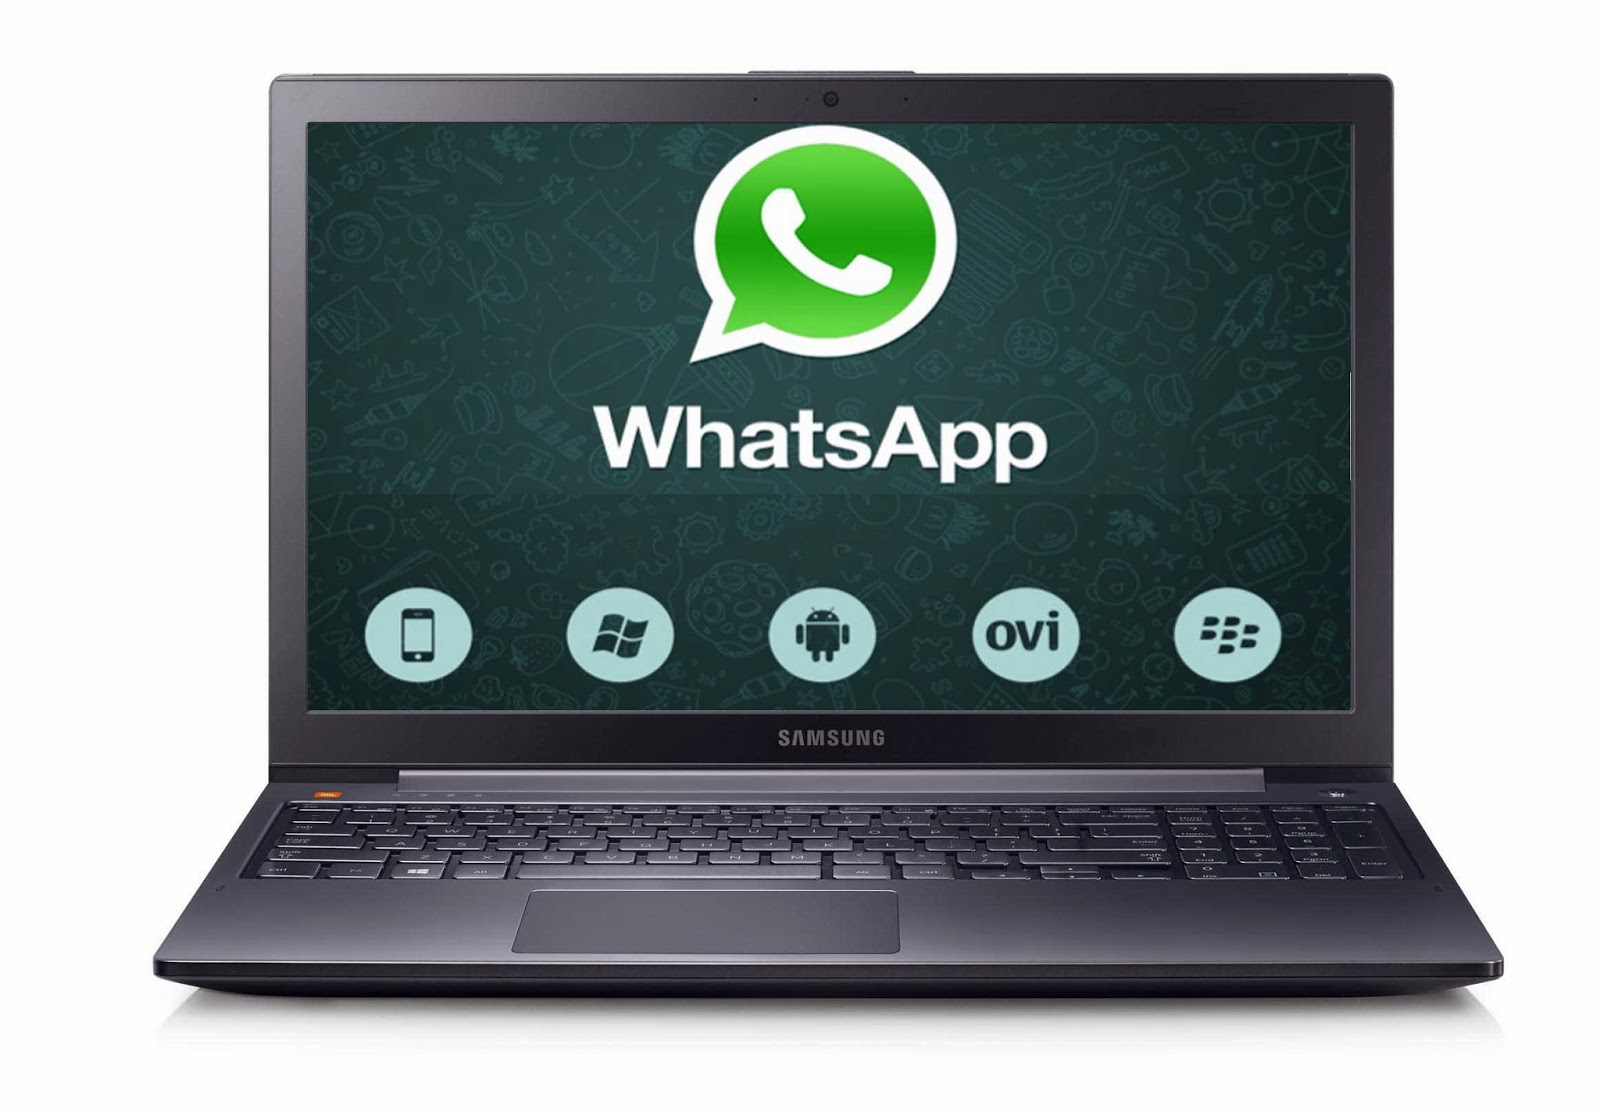 Whatsapp on pc desktop and laptop